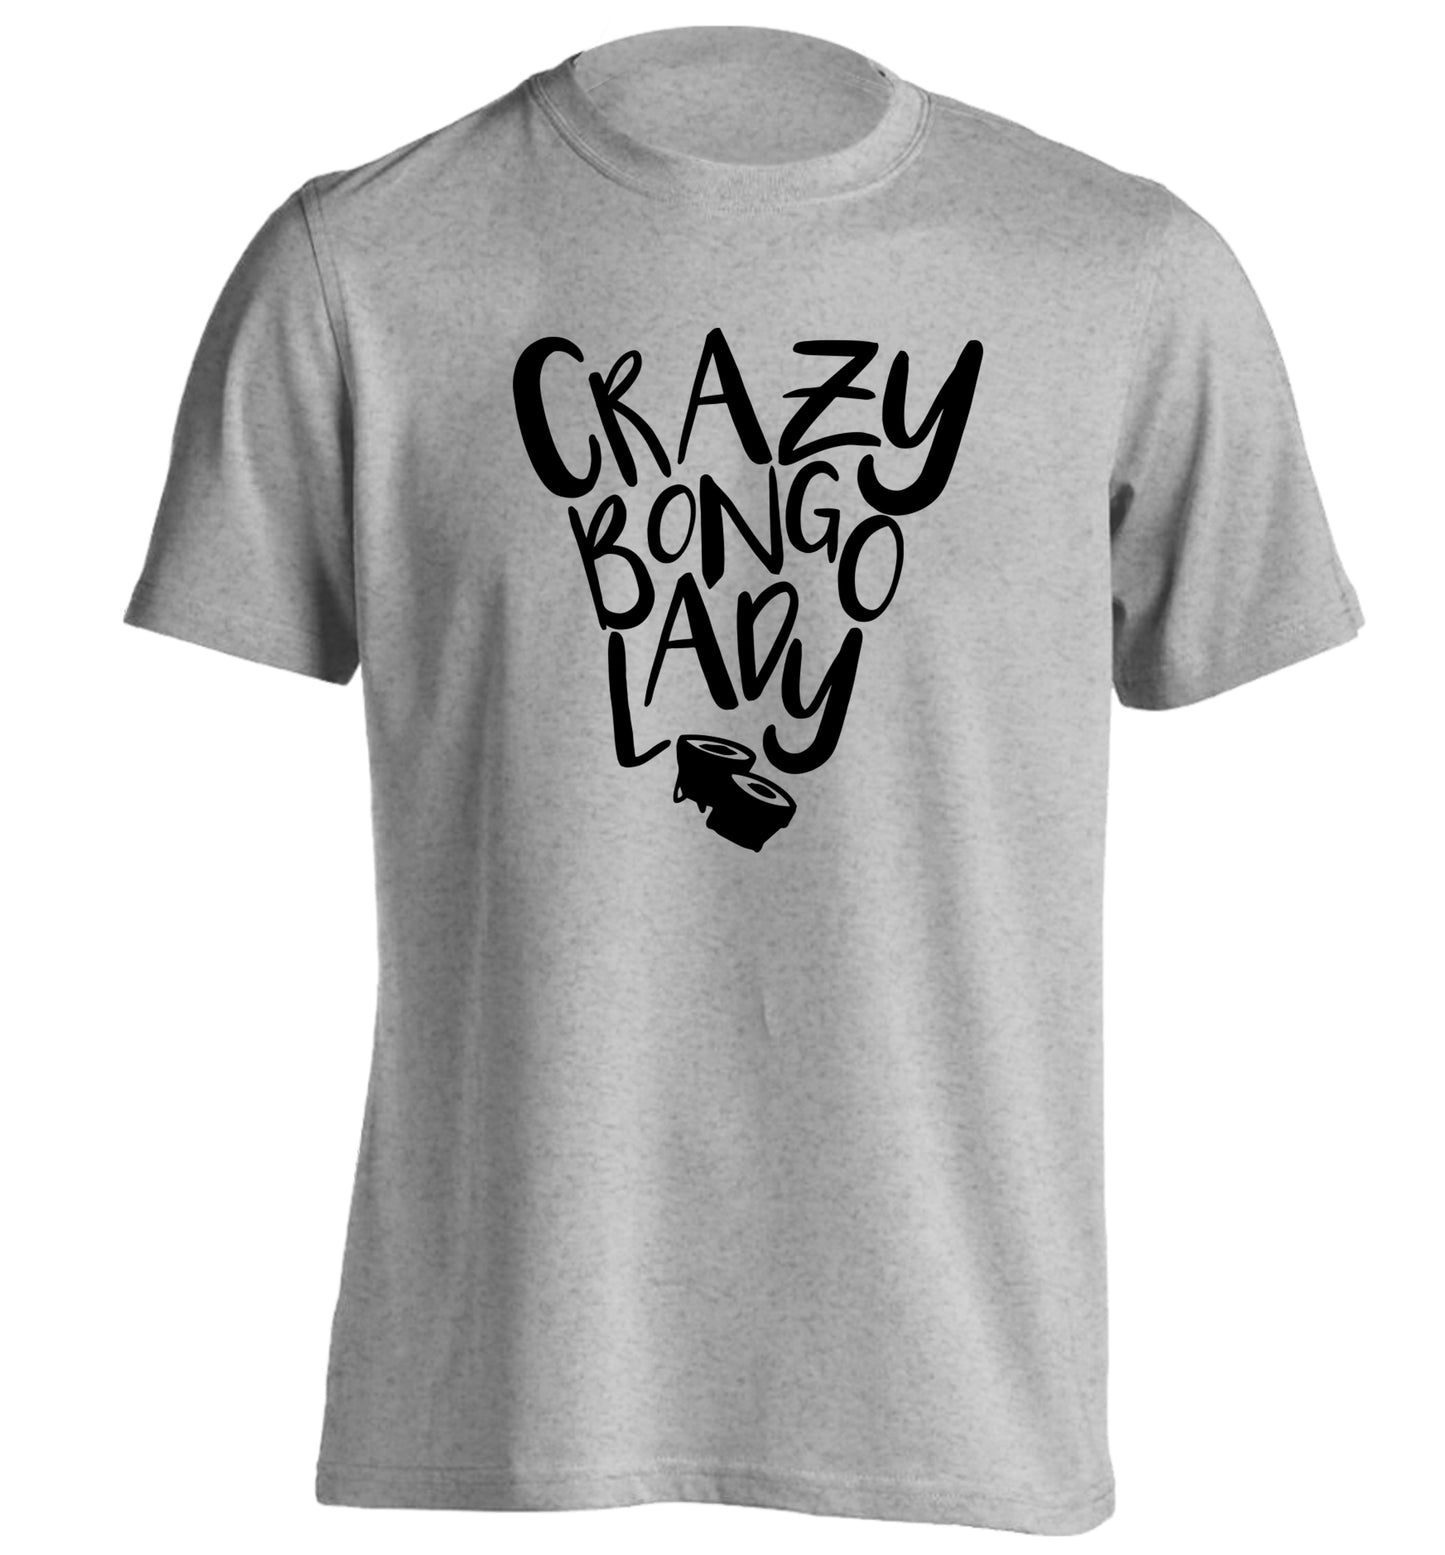 Crazy bongo lady adults unisex grey Tshirt 2XL